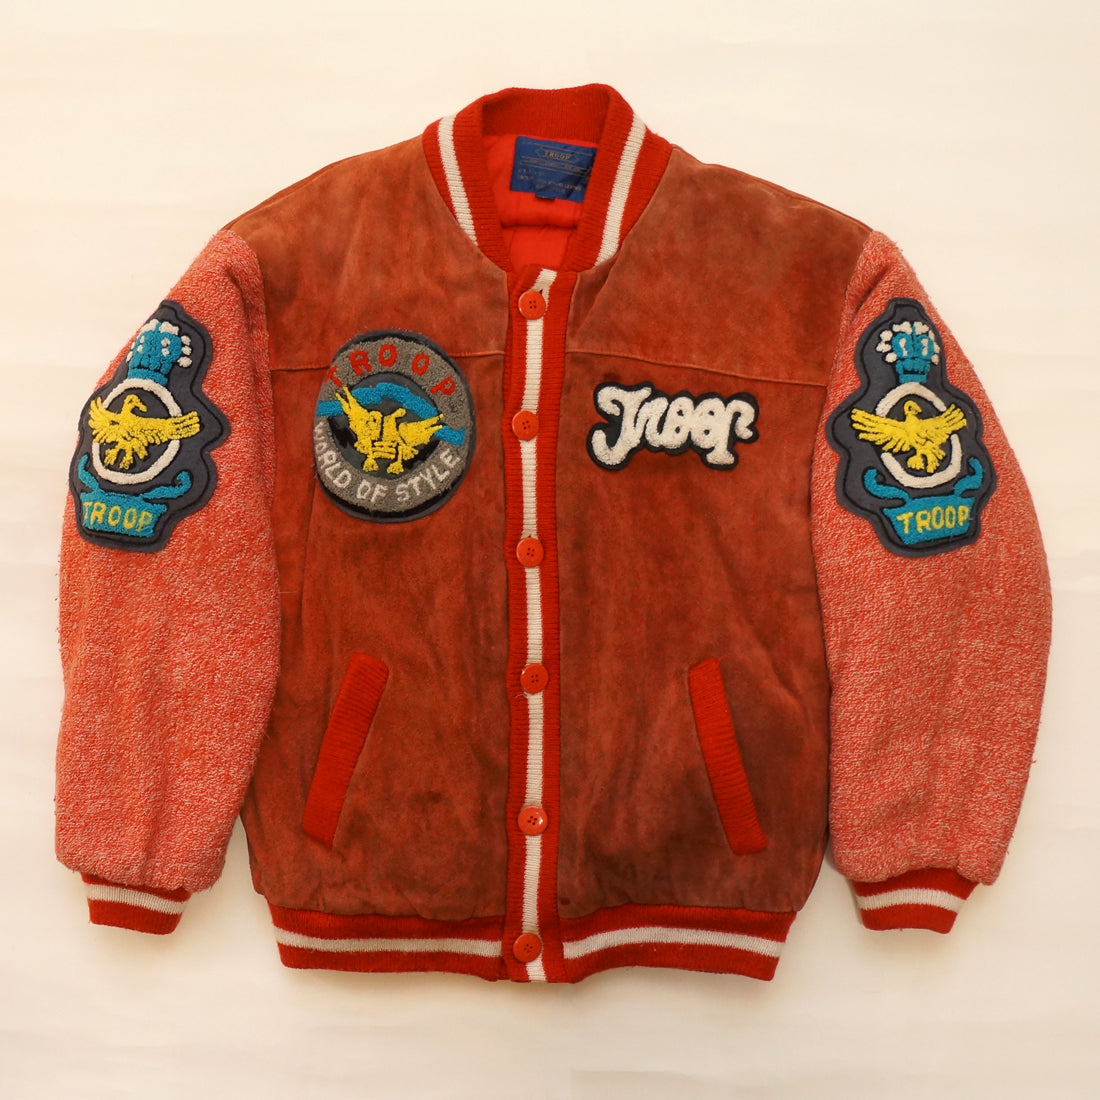 Vintage Leather "L.L. Cool J" Fashion Club Troop Jacket